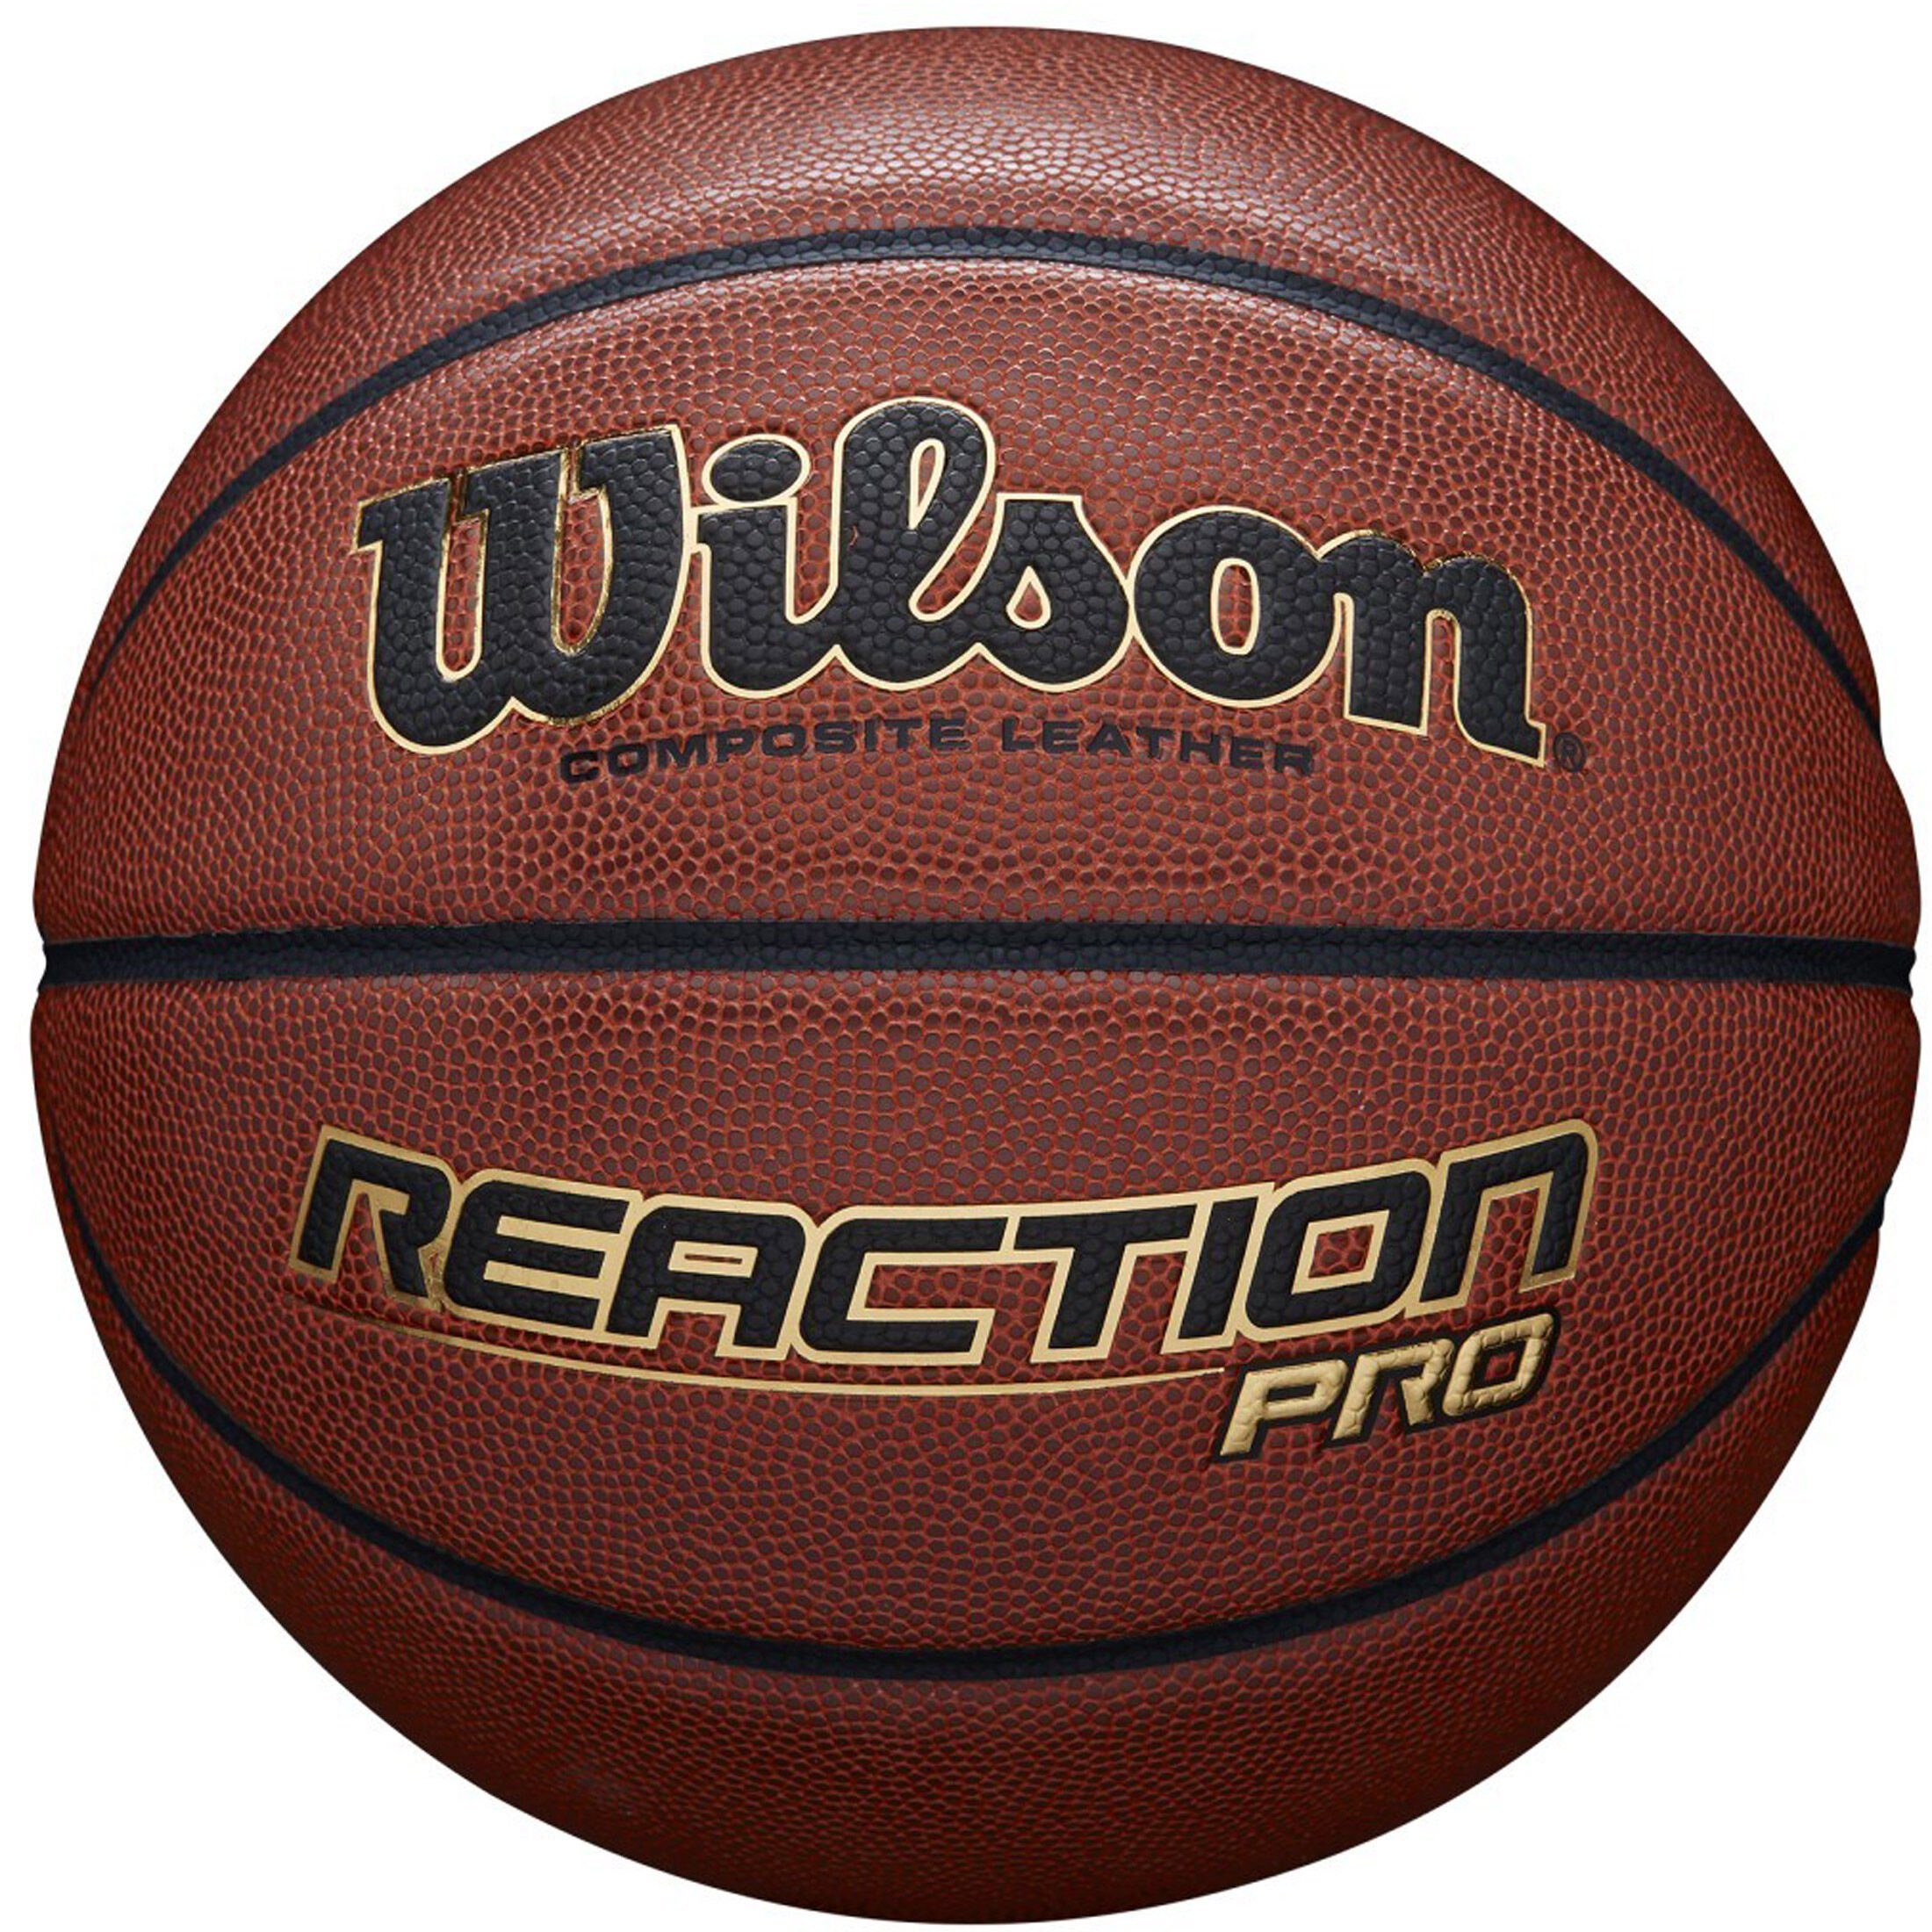 Reaction Pro Wilson Basketball Basketball